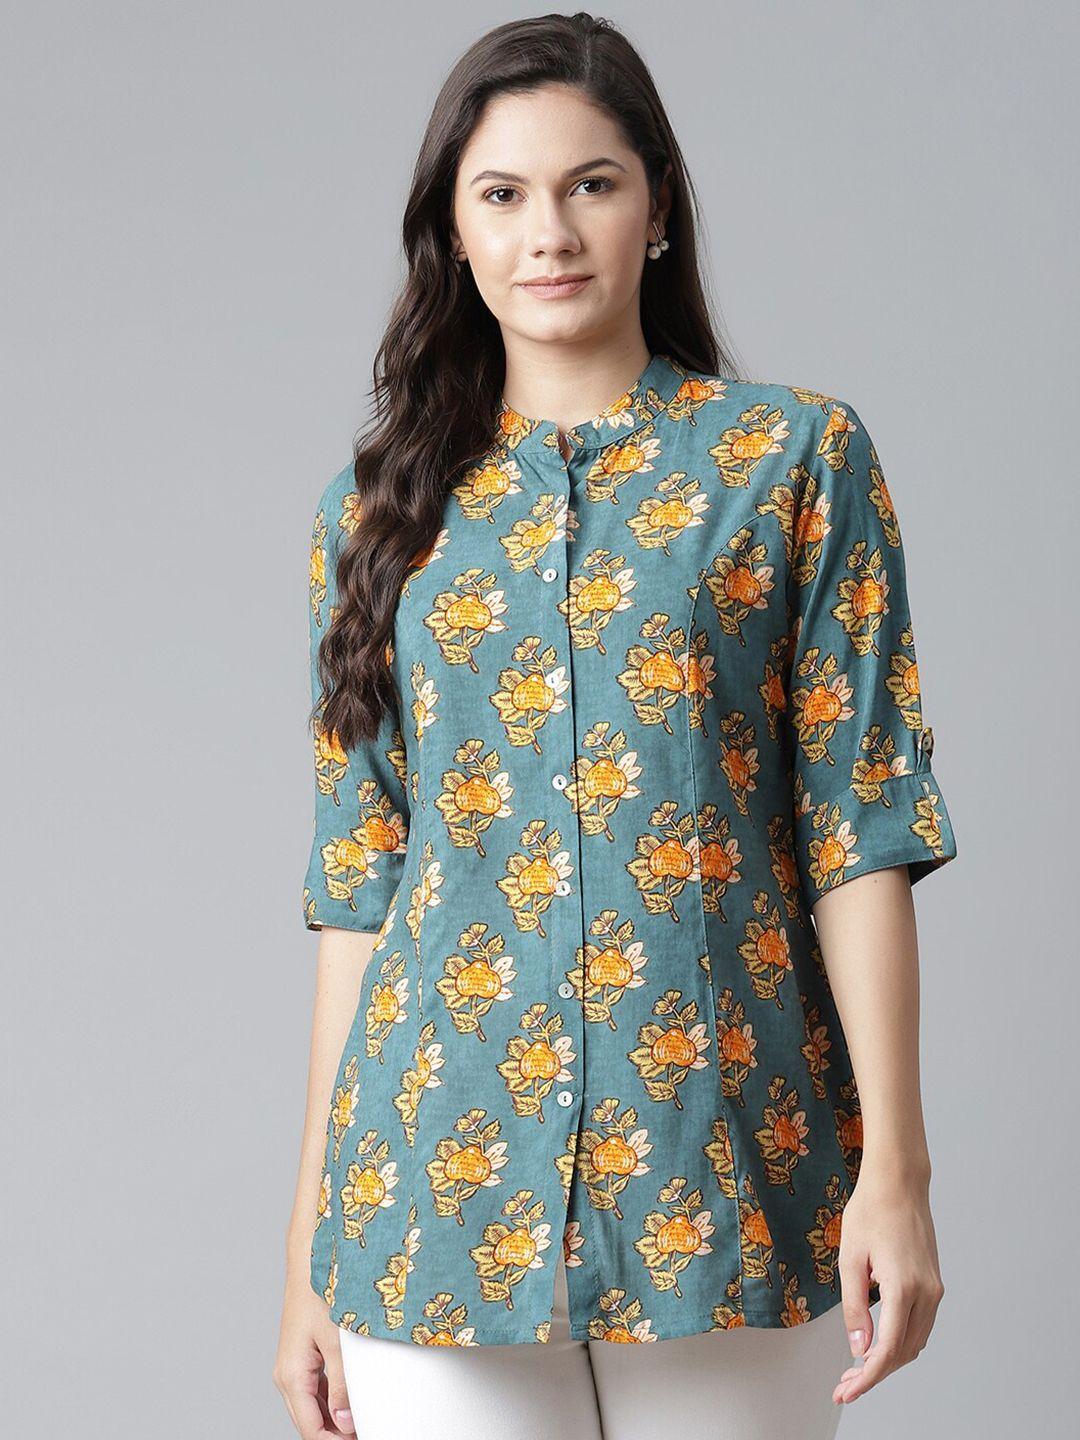 divena sea green floral print mandarin collar roll-up sleeves shirt style top